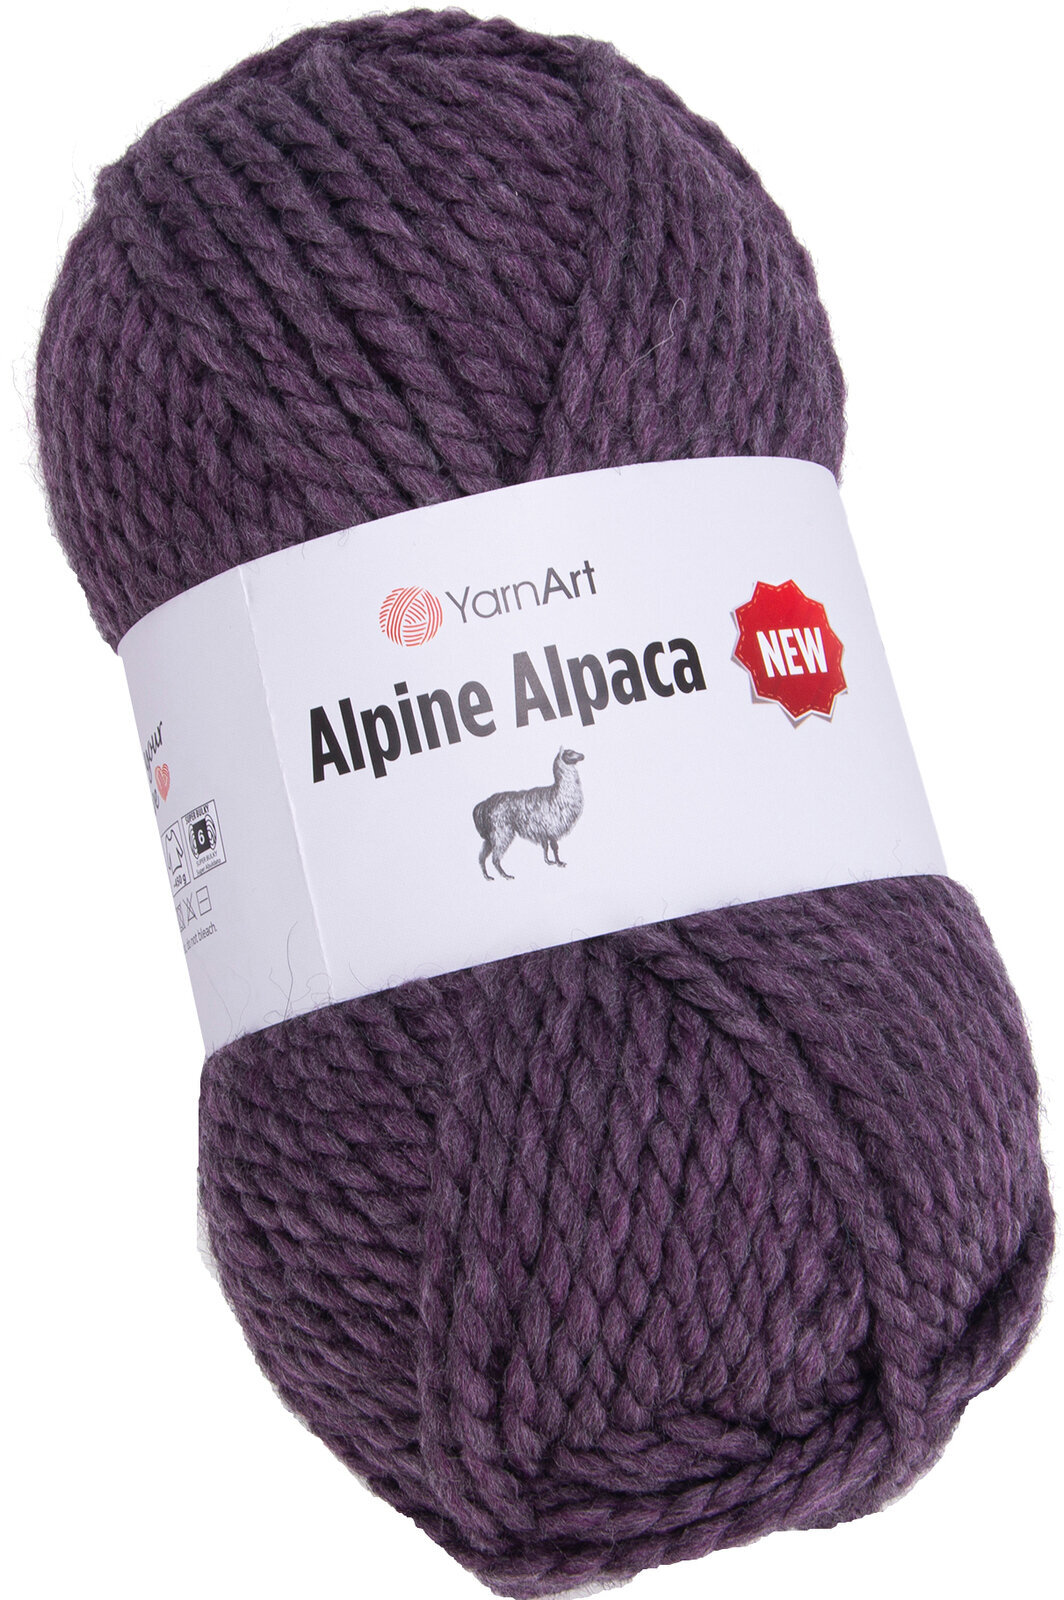 Pletací příze Yarn Art Alpine Alpaca New 1451